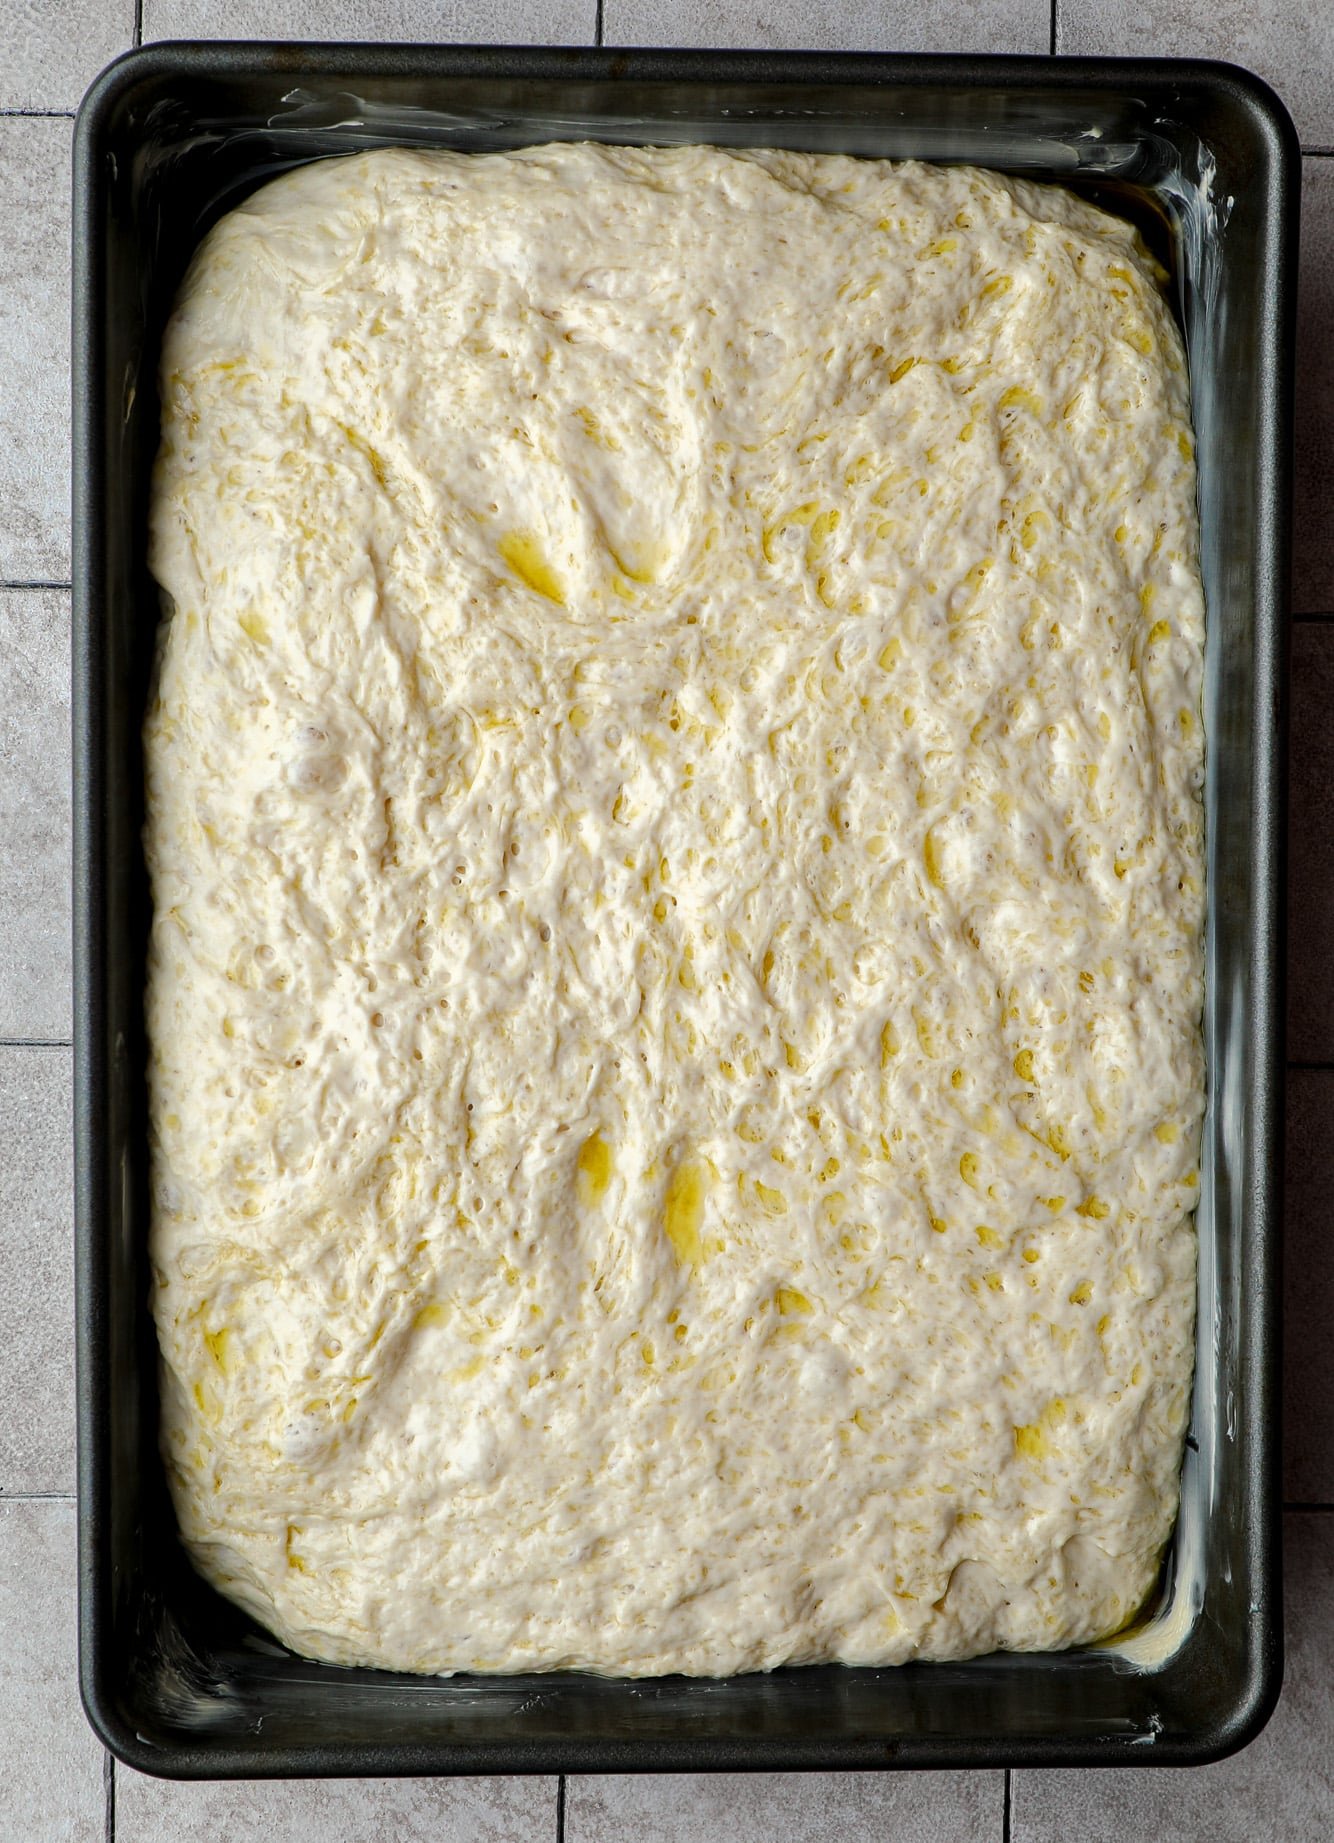 focaccia dough in a large black baking pan.